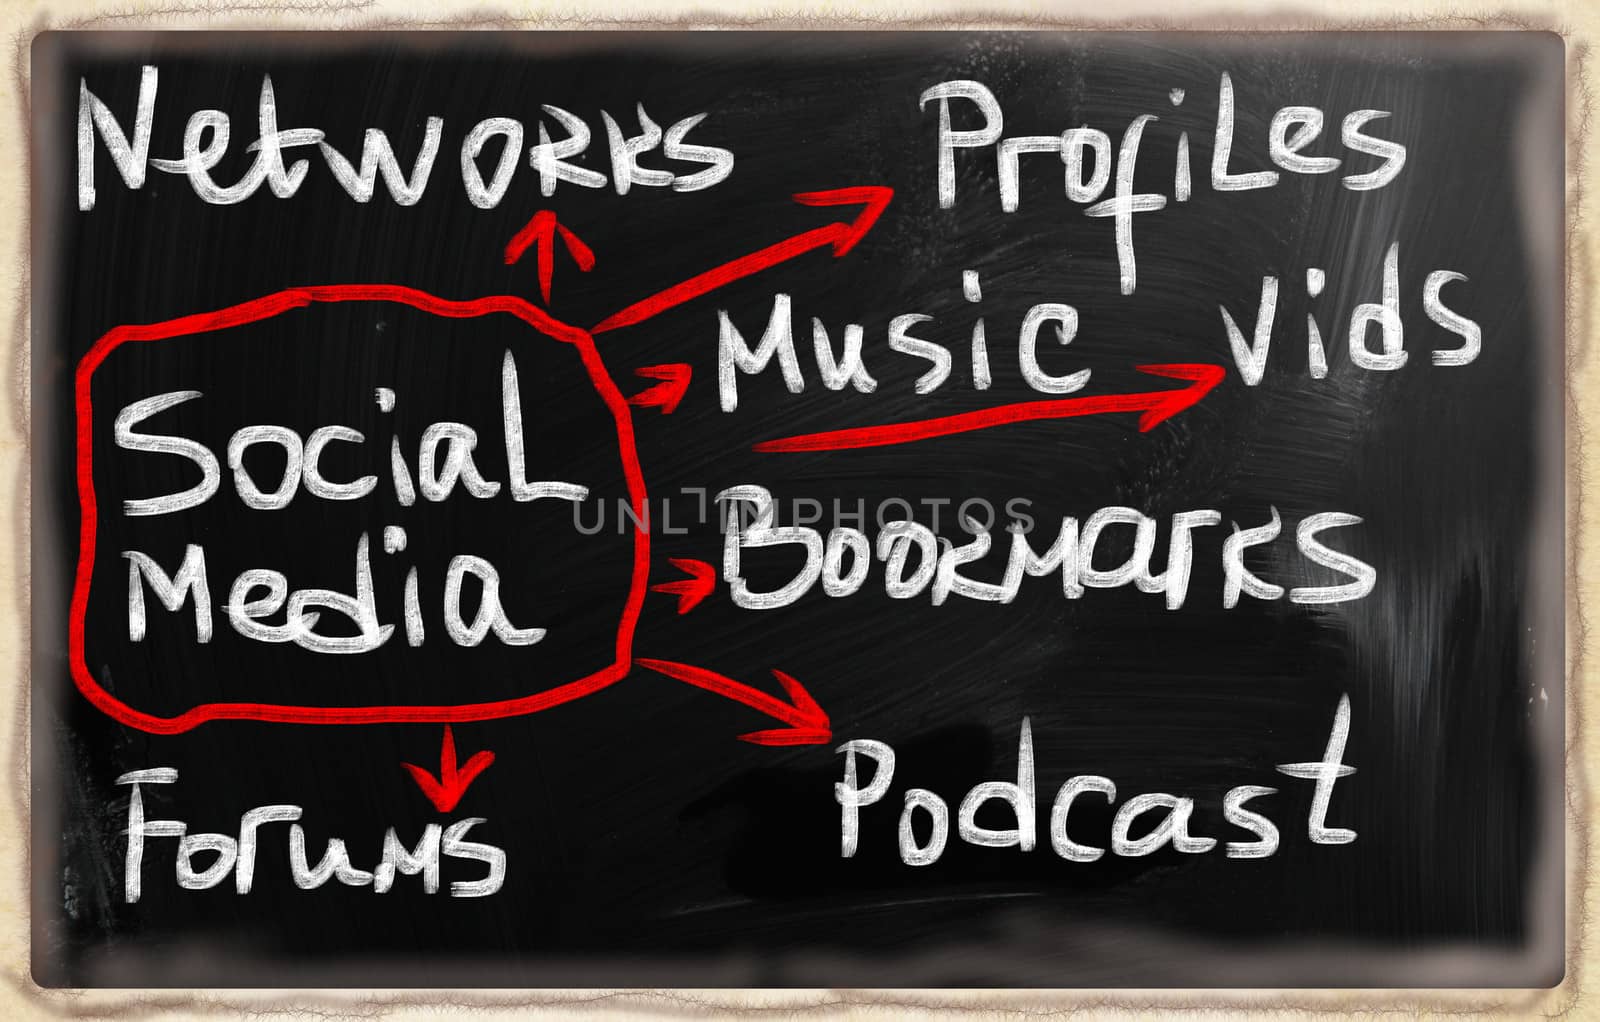 social media concept - text on a blackboard.